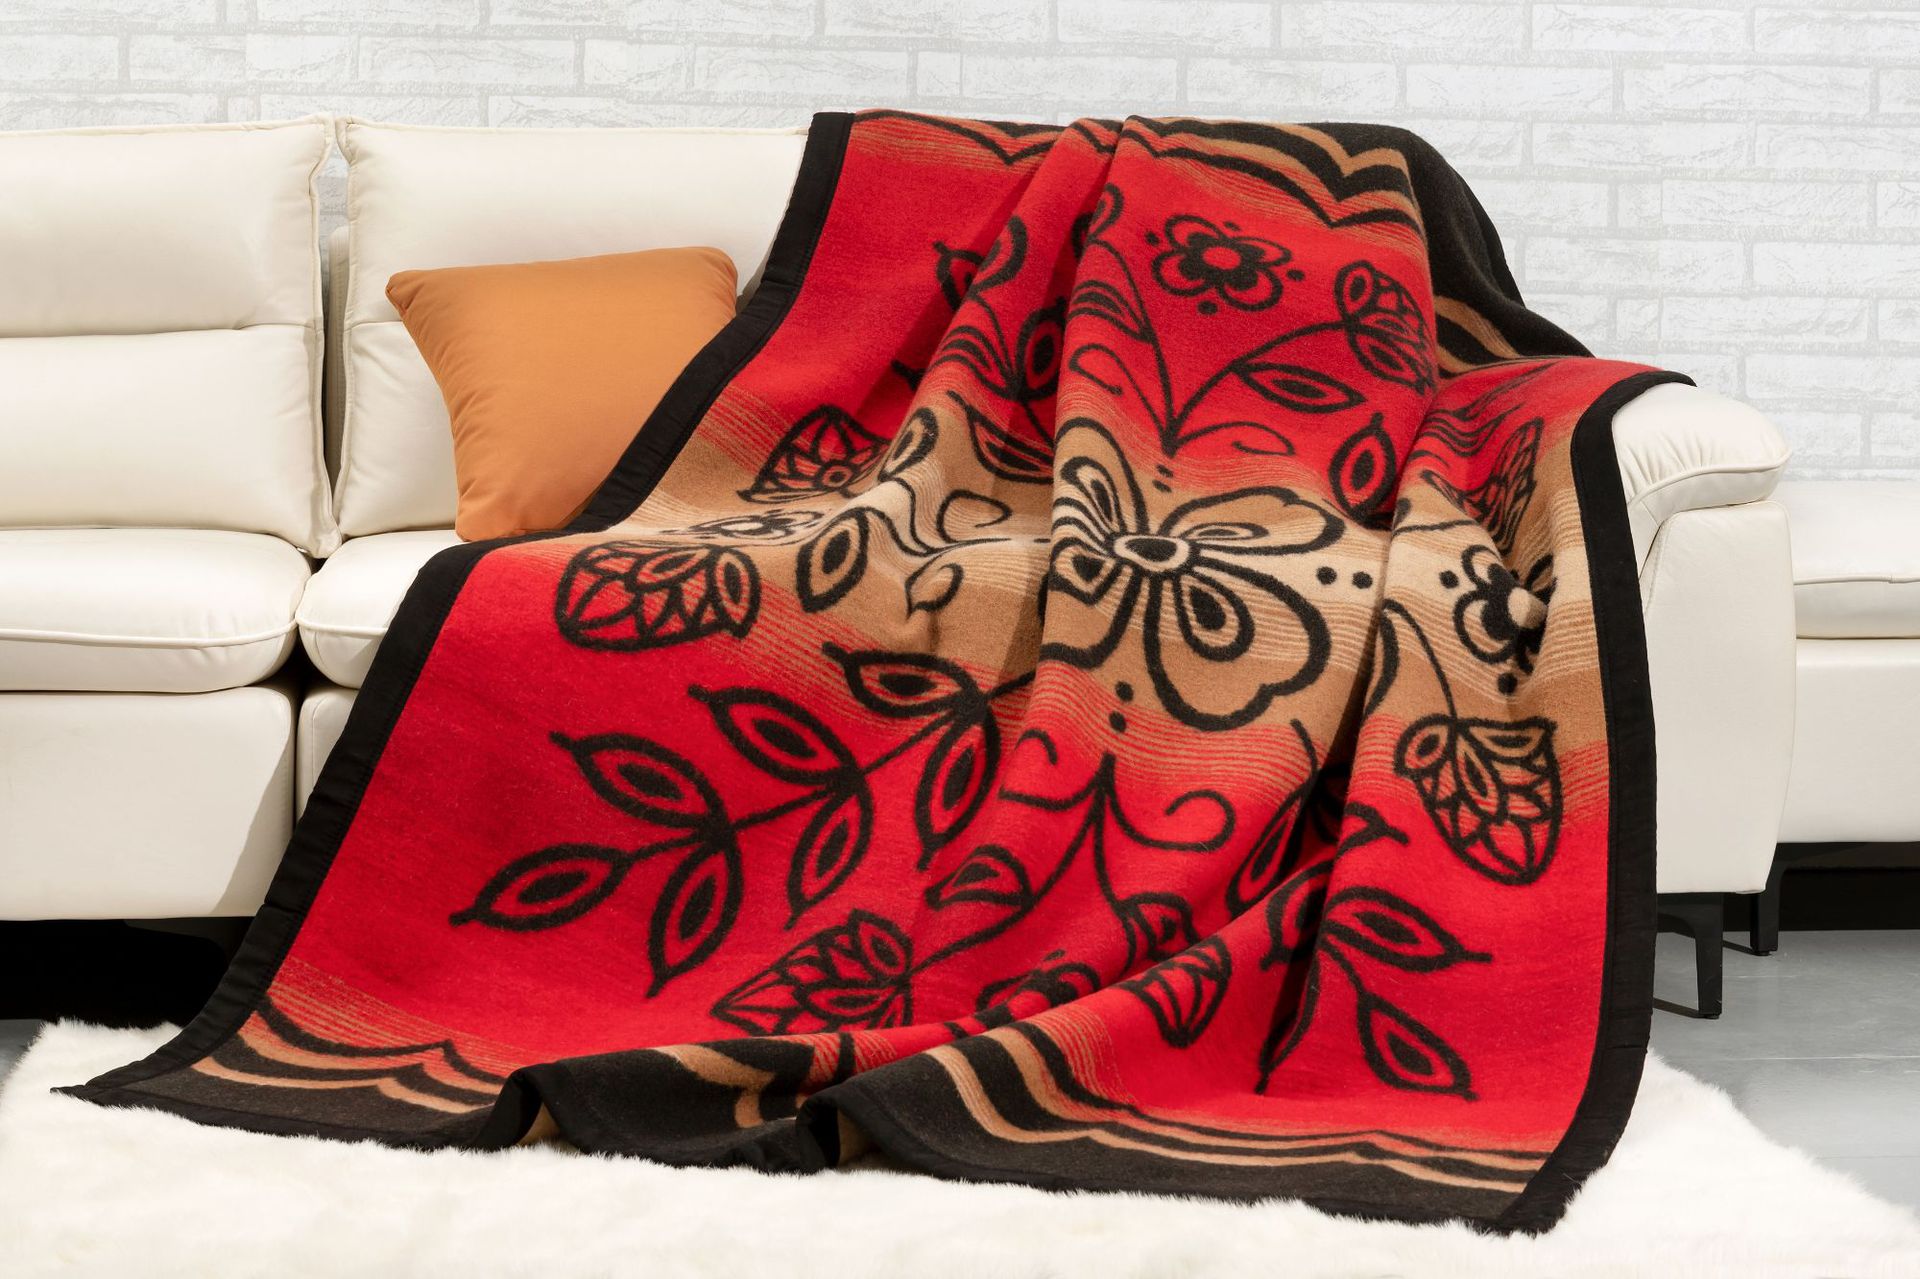 Hot Spot Jacquard Soft Comfortable Bed Cover Blanket Winter Warm Woolen Blanket Outdoor Camping Blanket